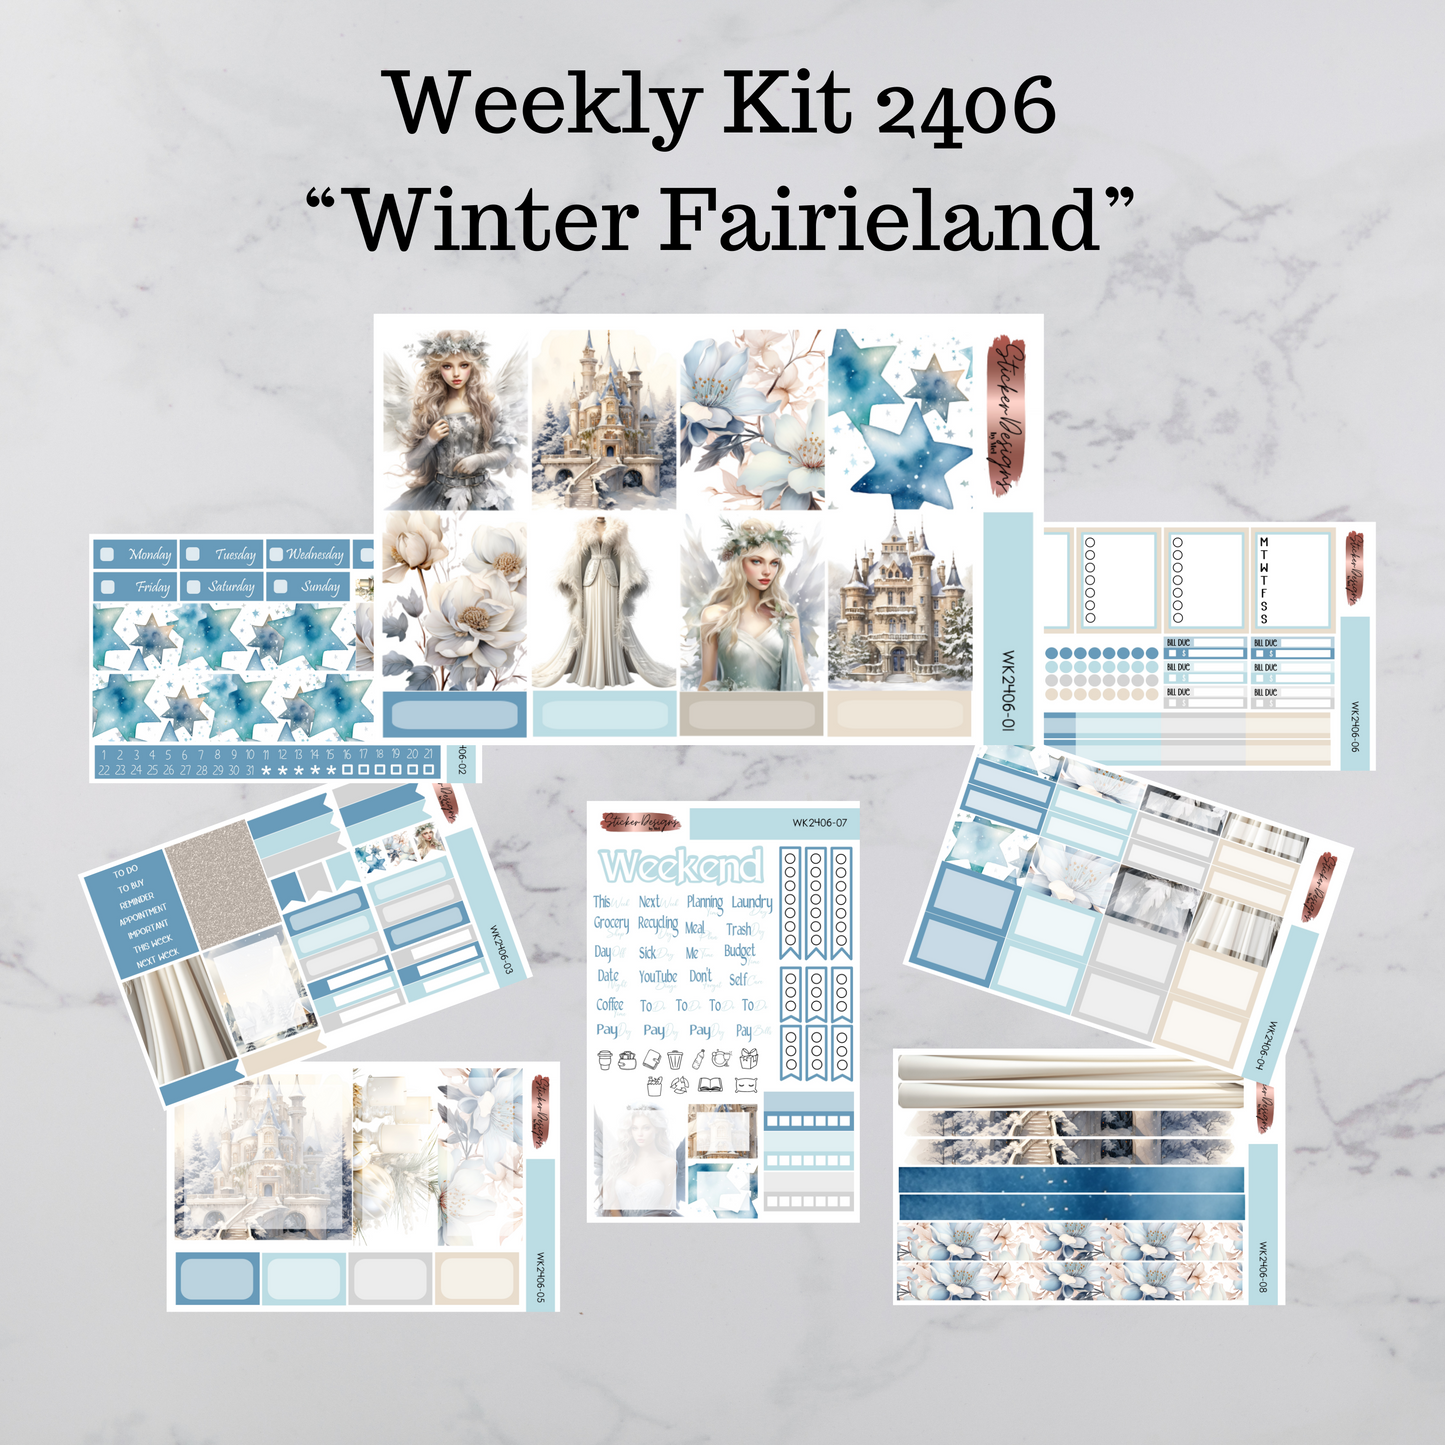 Weekly Kit 2406 - Winter Fairieland - Vertical Layout